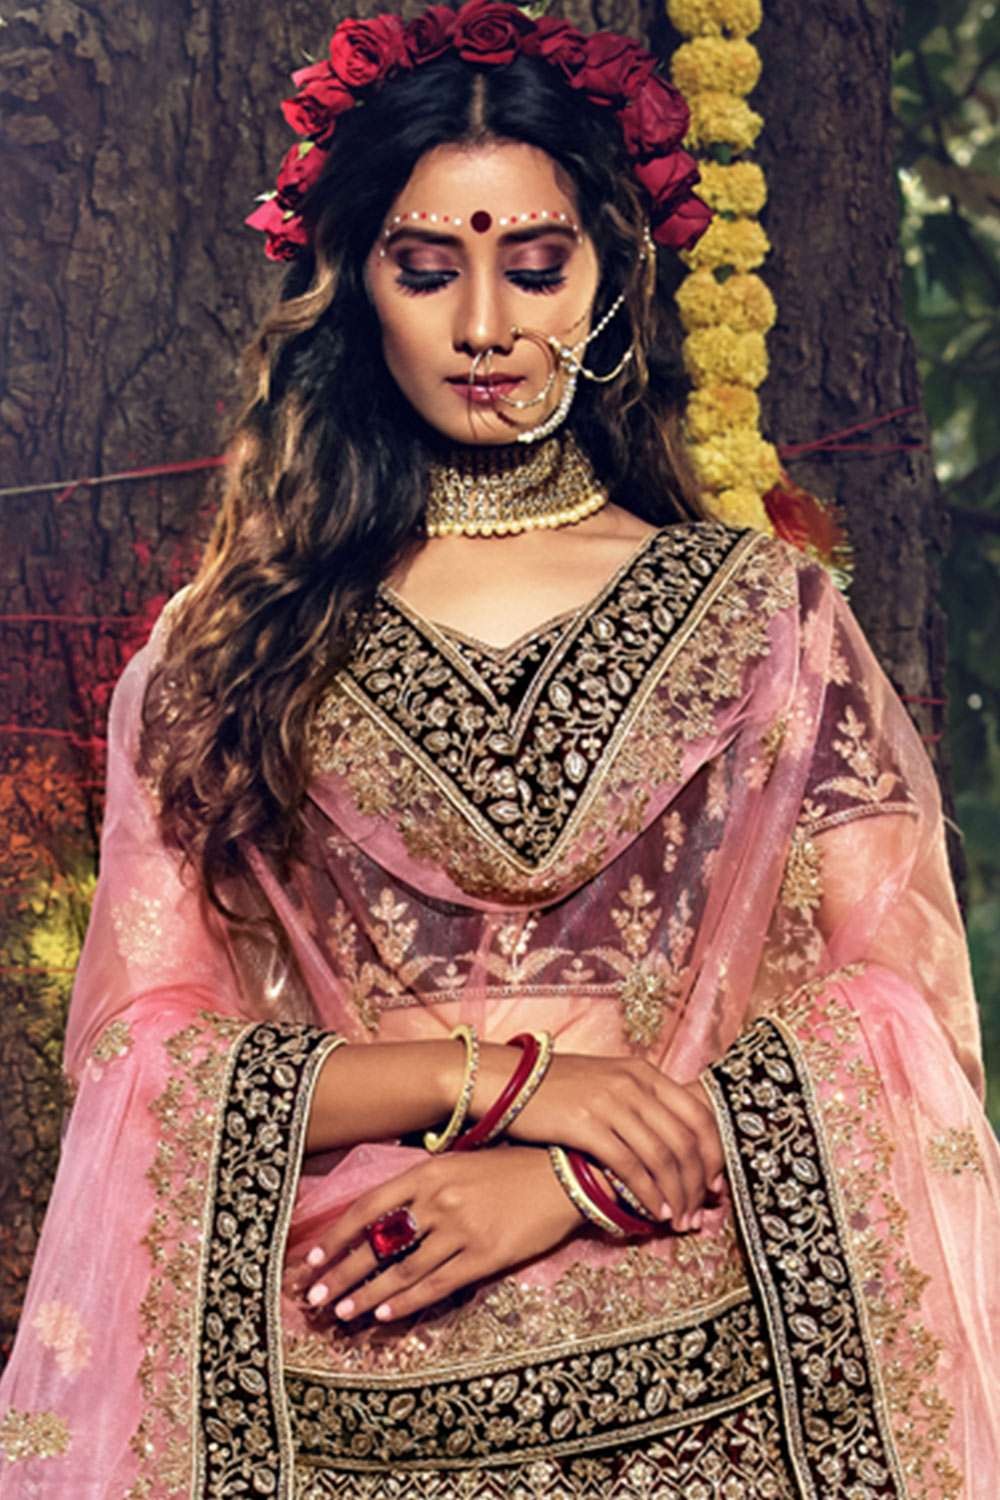 Buy Bollywood model maroon velvet bridal lehenga in UK, USA and Canada